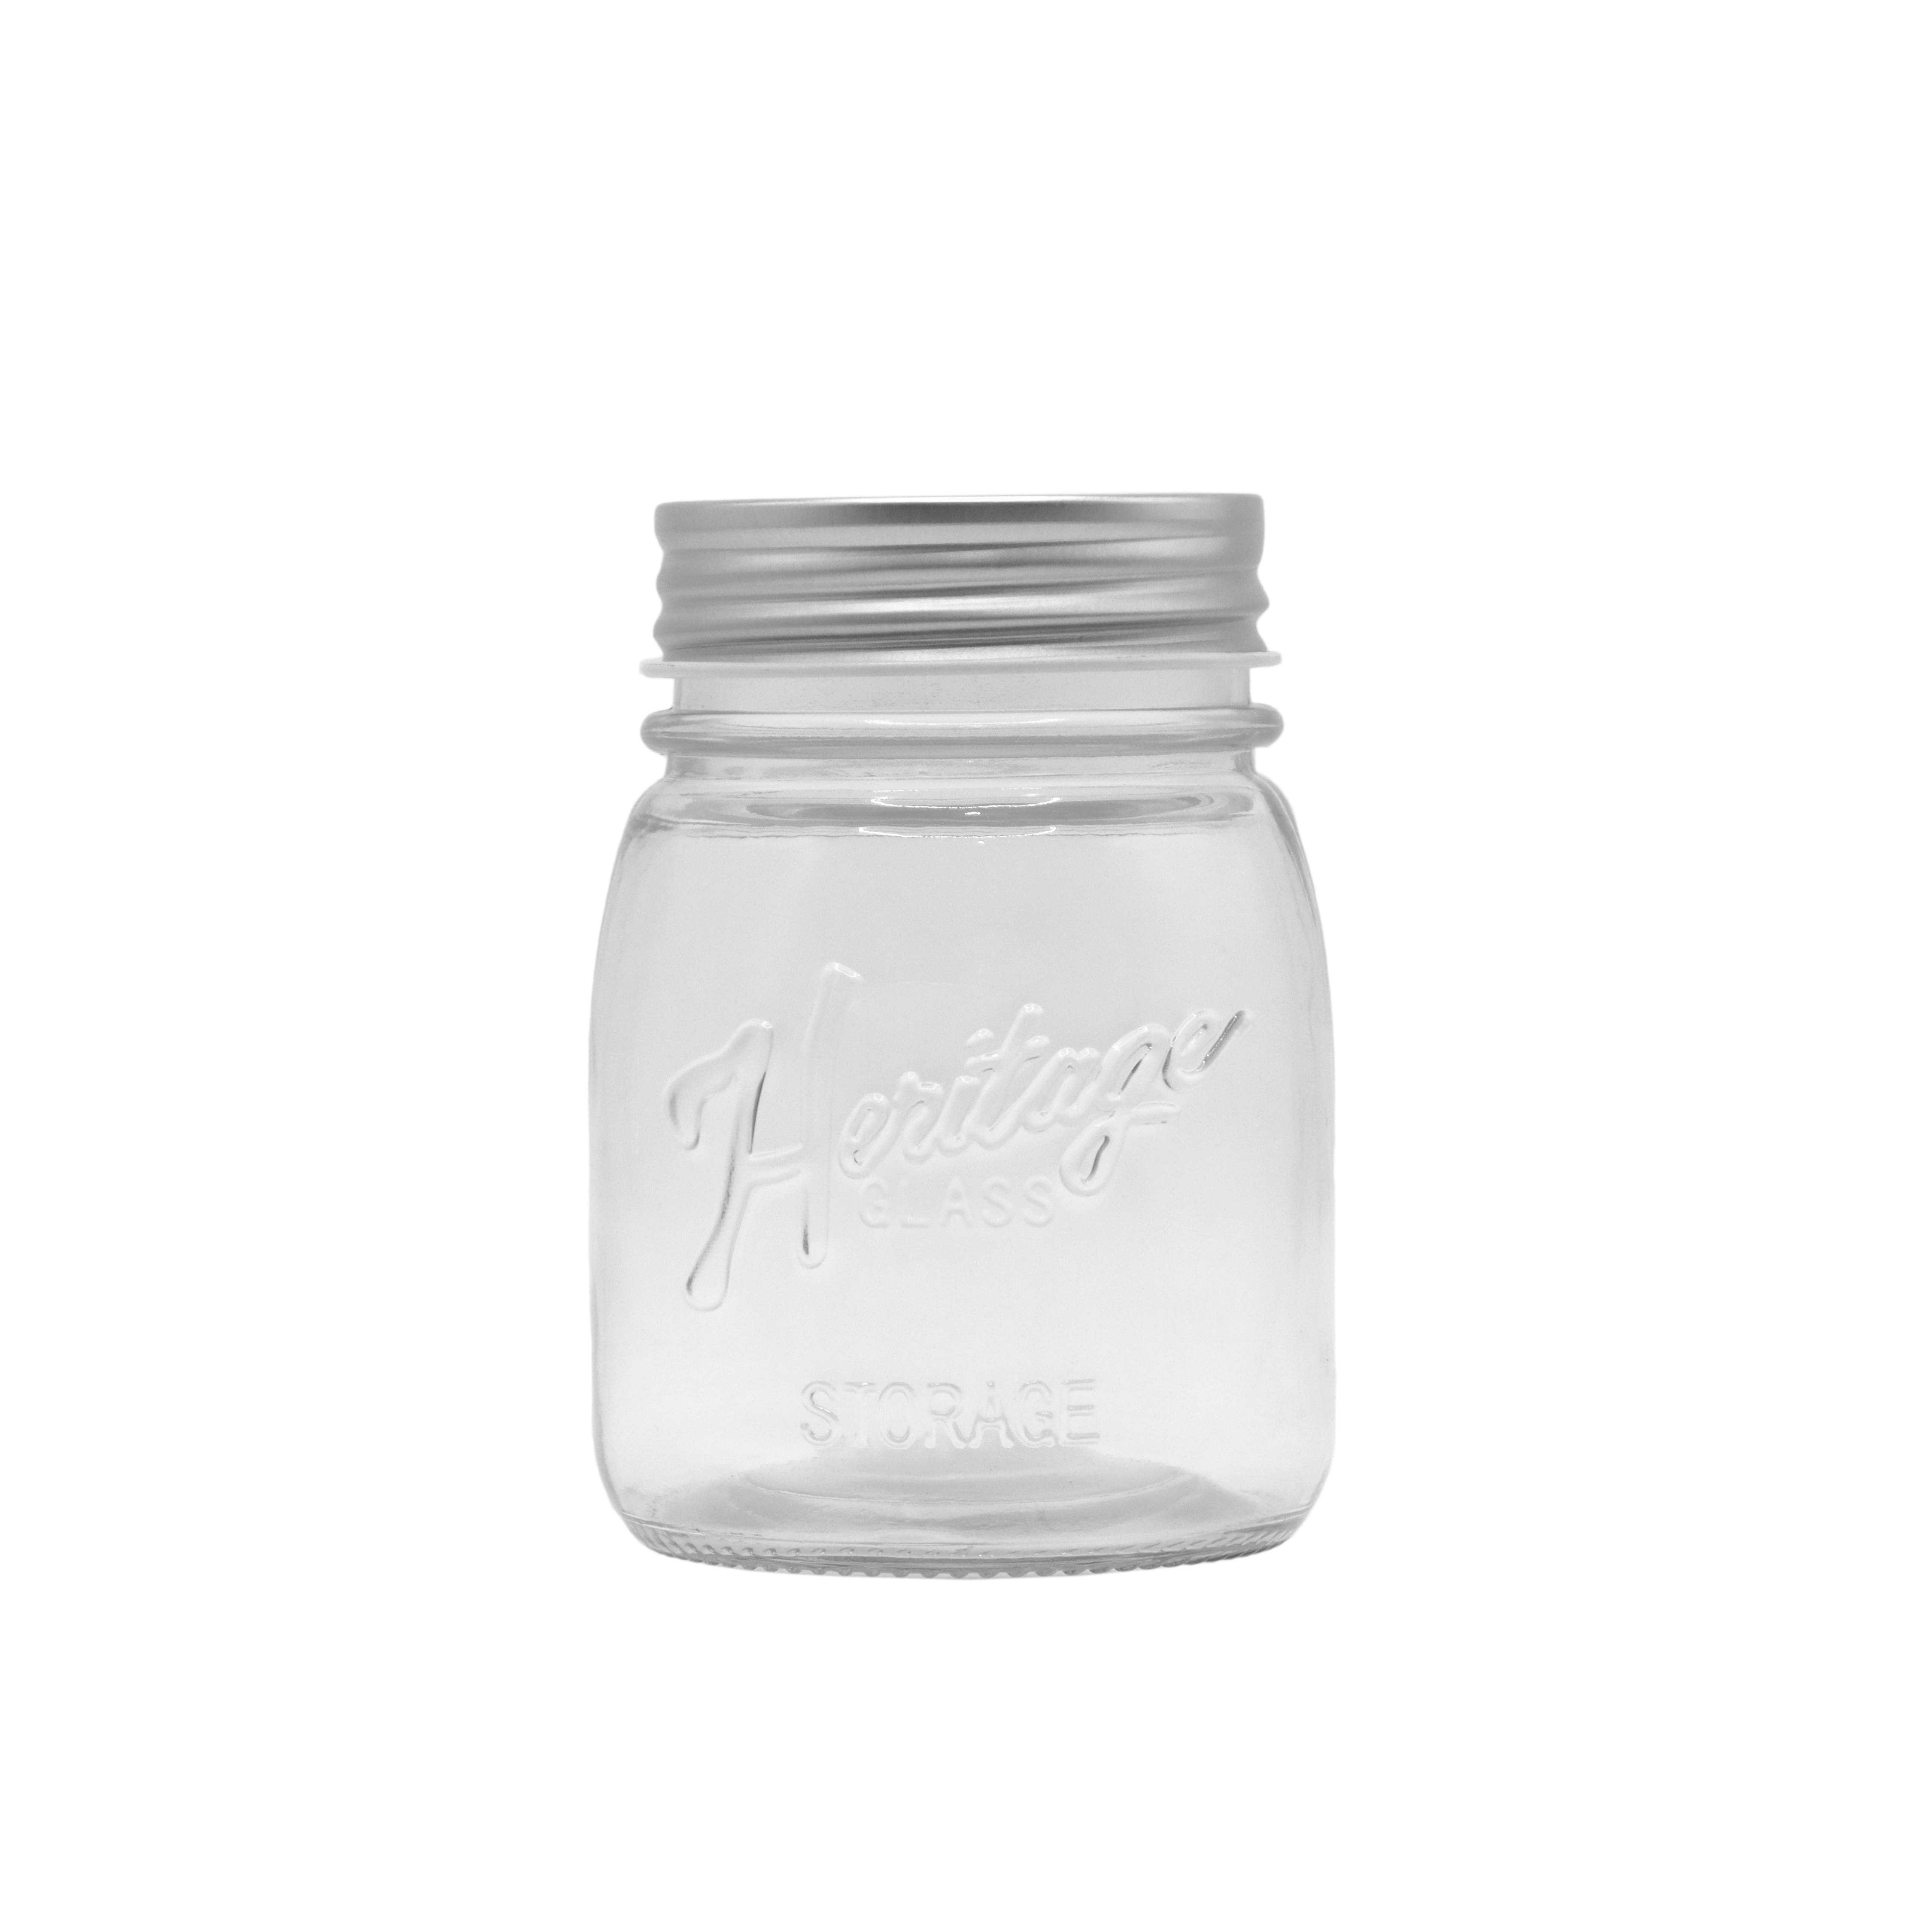 Quart Mason Jar Mug with Lid by Ashland®